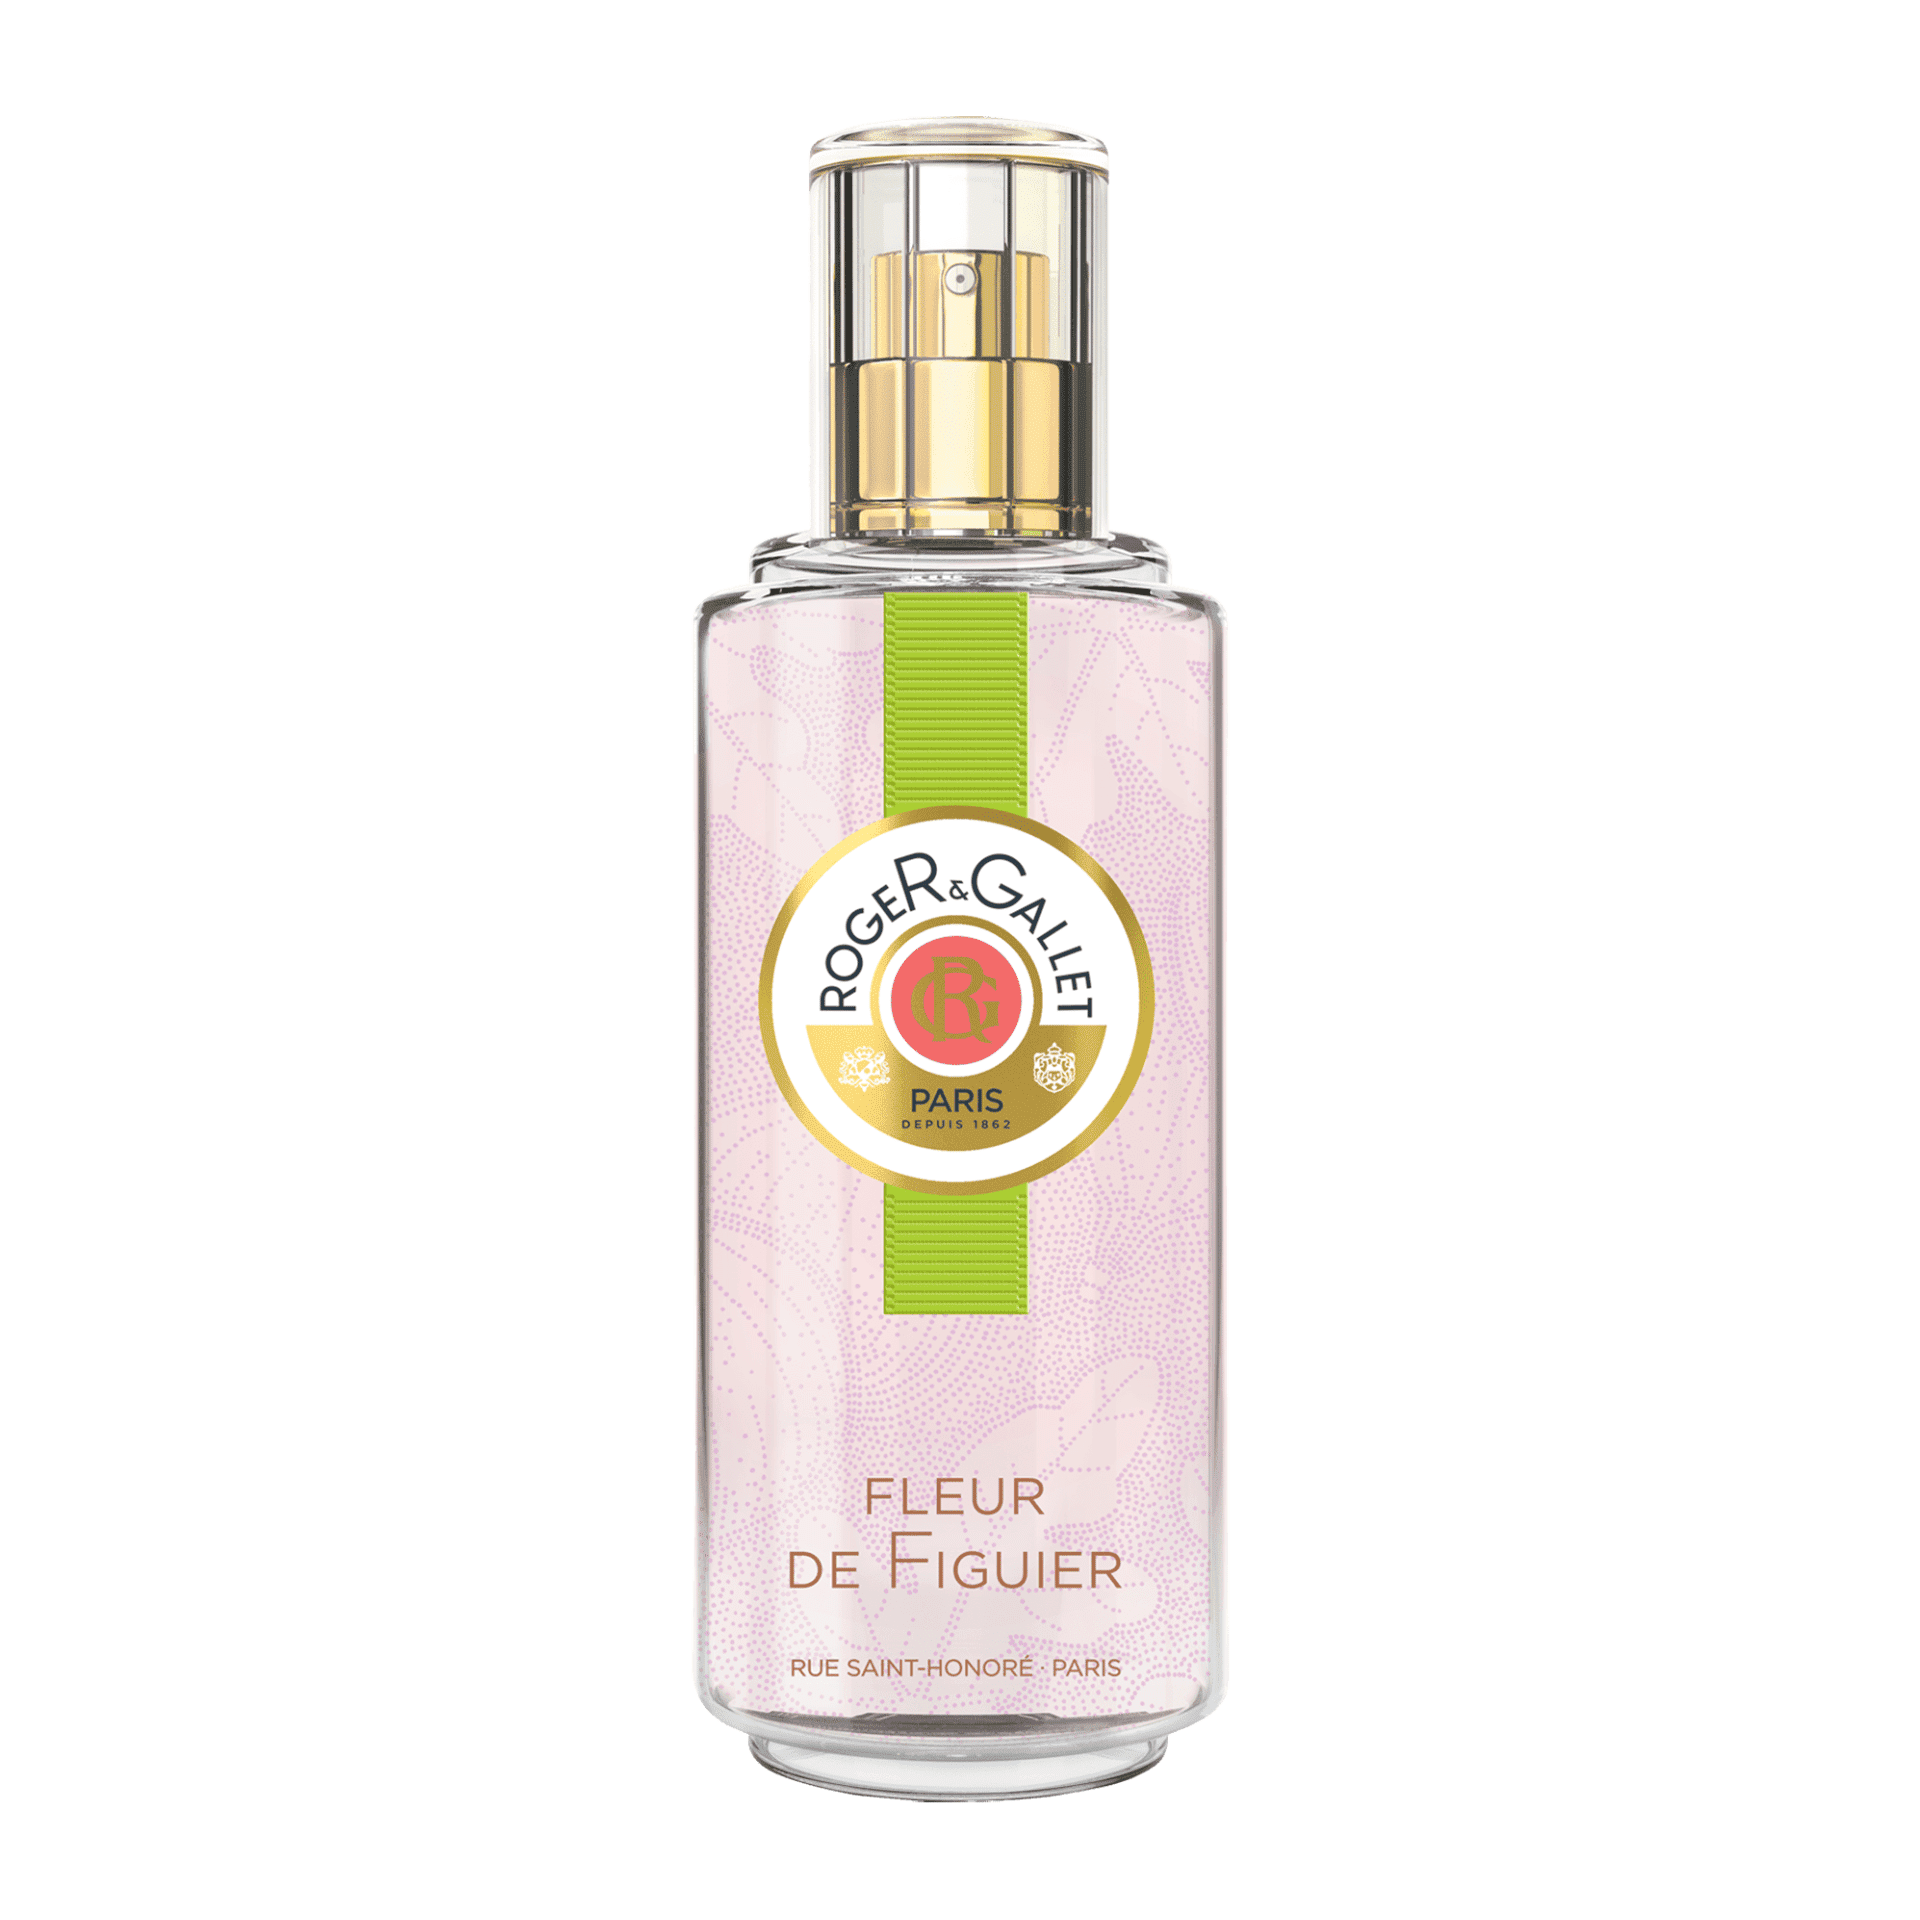 Roger & Gallet Fleur de Figuier Eau Fraiche Parfumee 100 ml